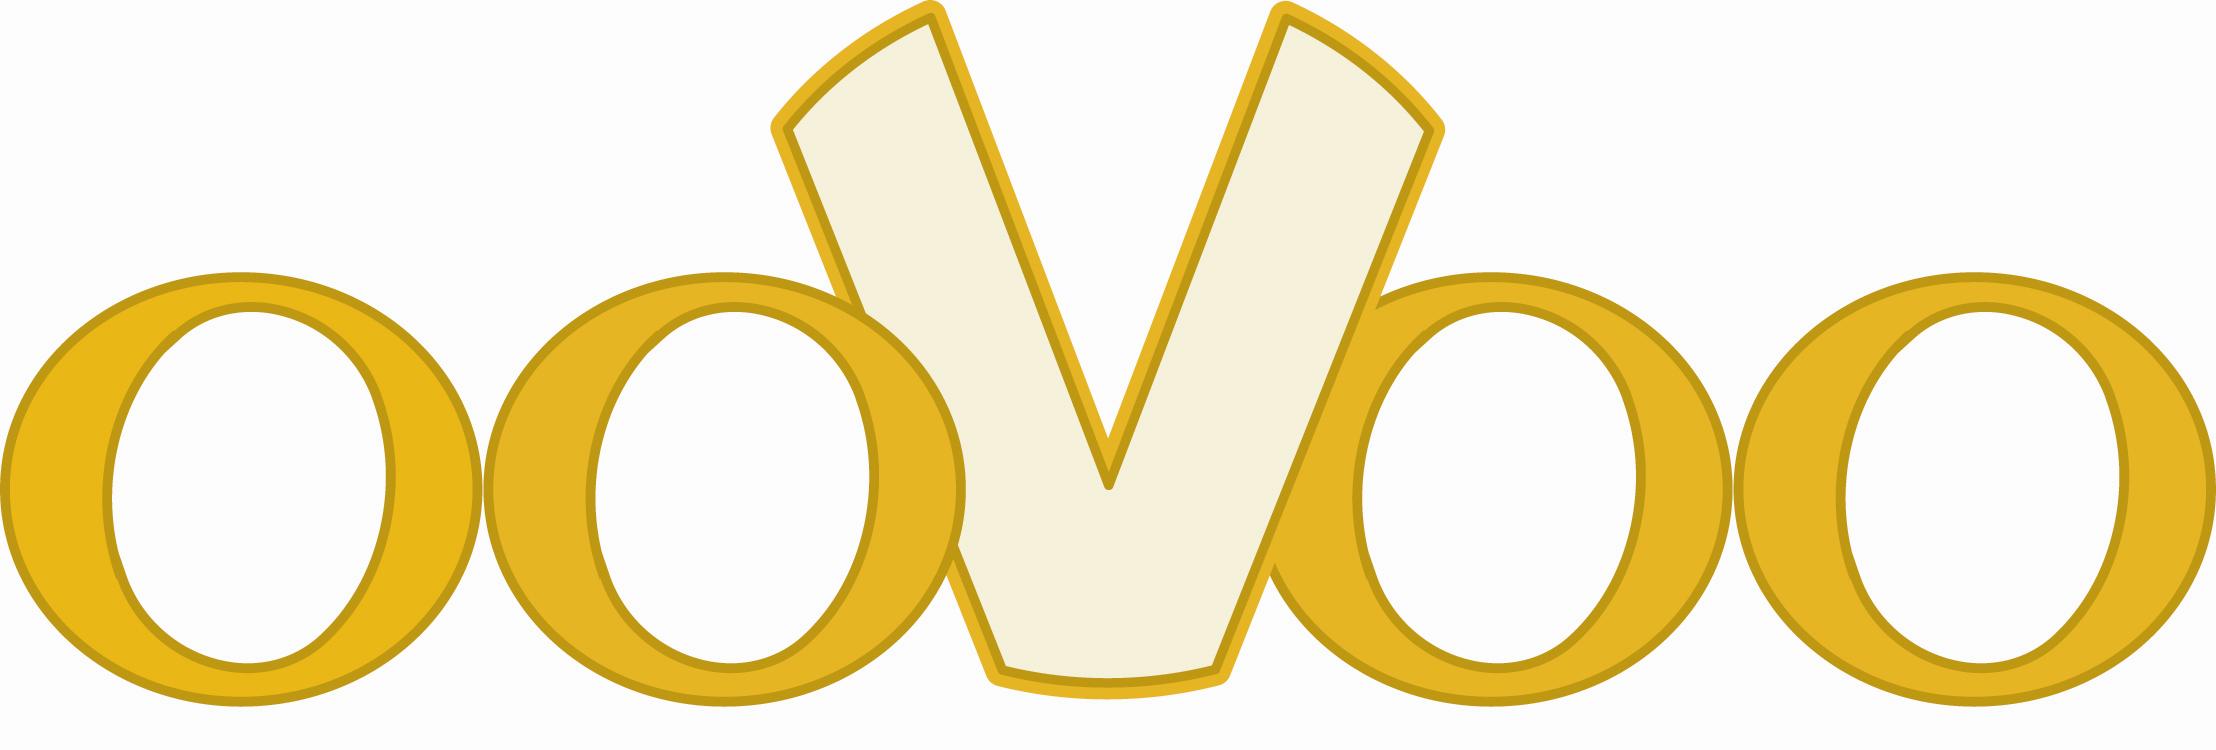 Oovoo logo - Telecharger.itespresso.fr